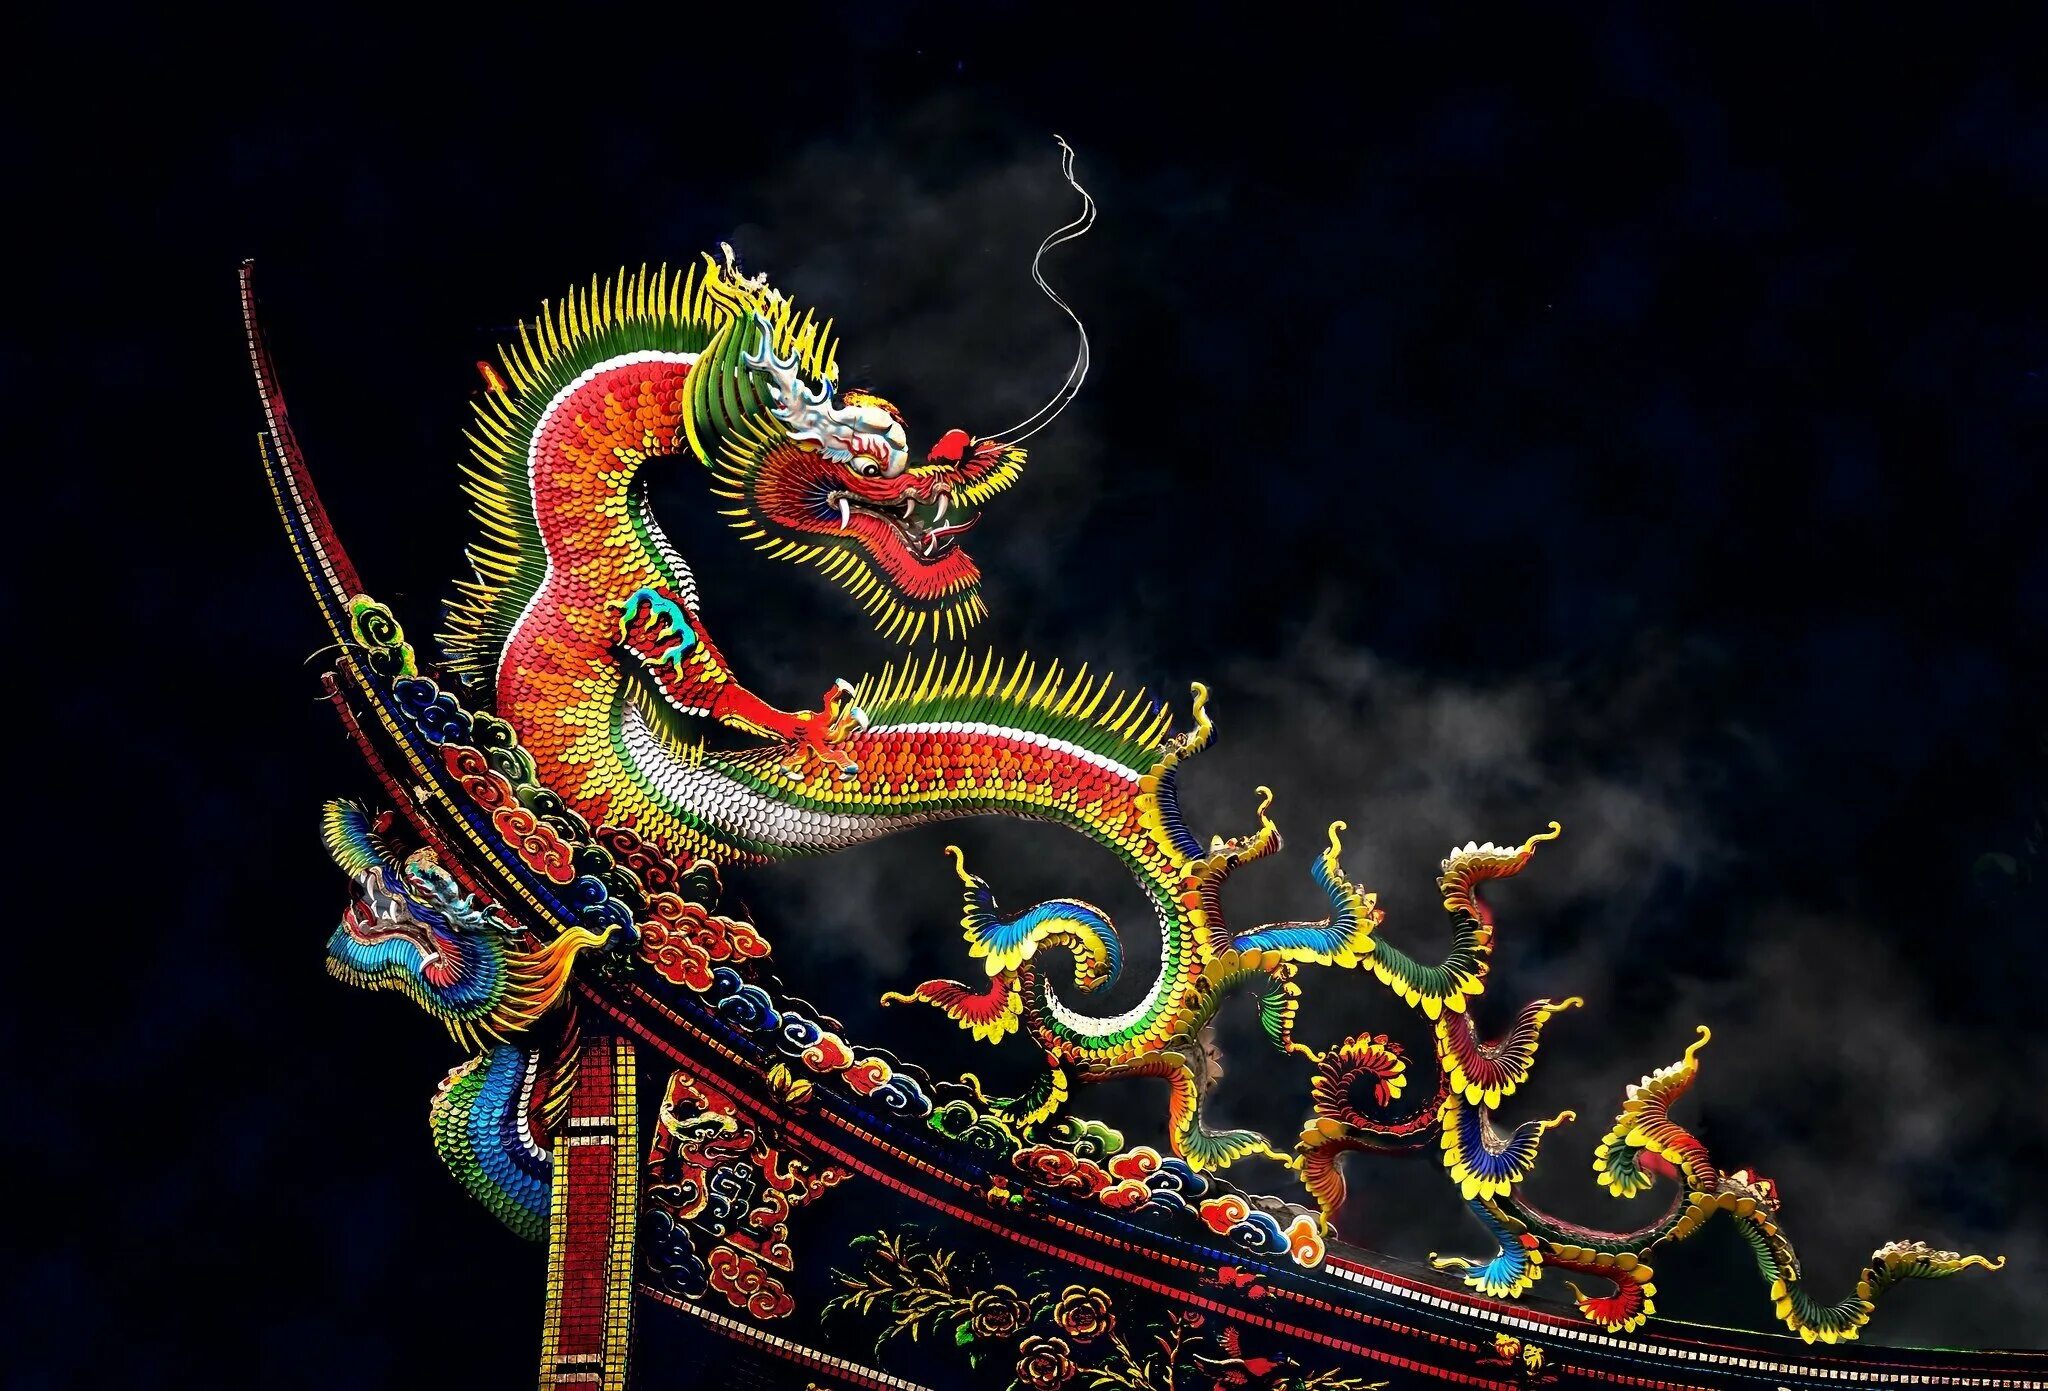 Тяньлун дракон. Китайский дракон Шеньлун. Китайский дракон чиа. Фуцанлун дракон. Китайский японский дракон